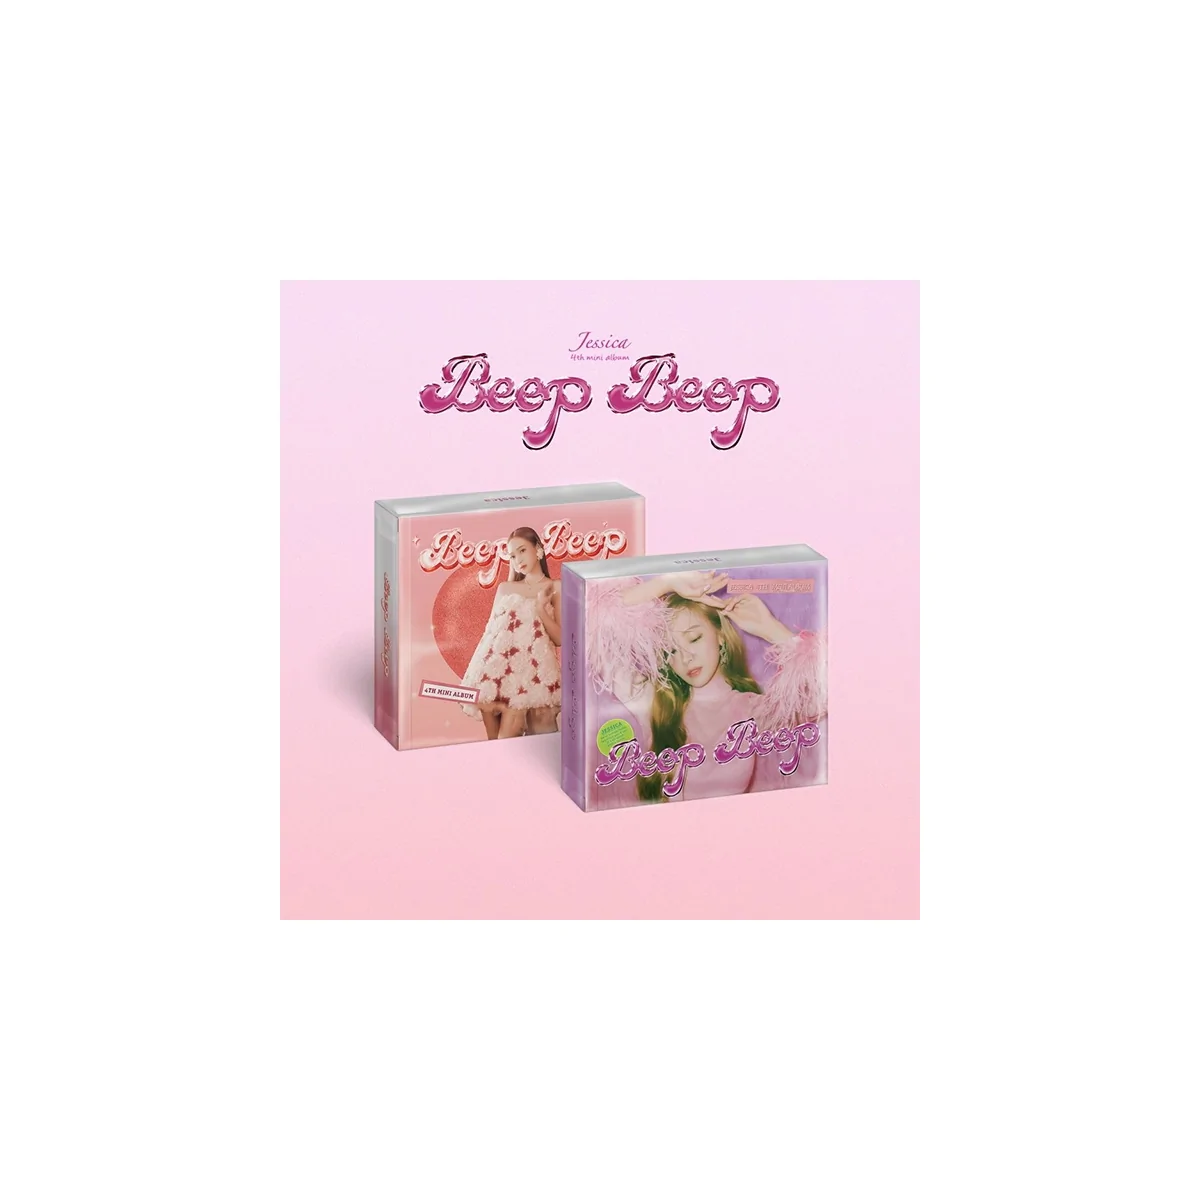 Jessica - Beep Beep (STAR VERSION) (4th Mini Album) 